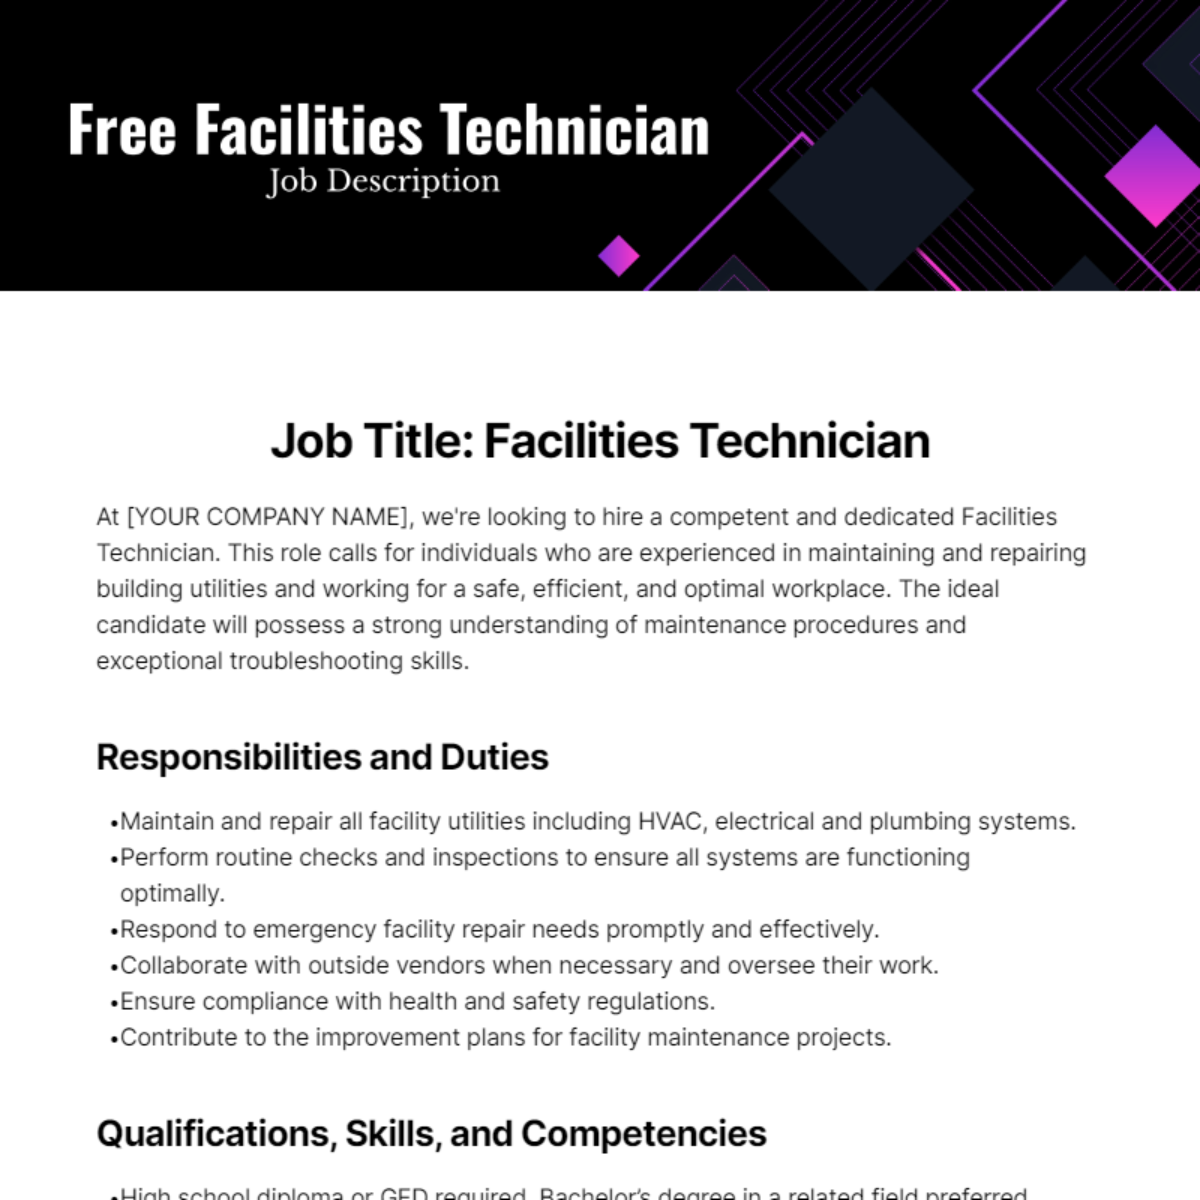 Free Facilities Technician Job Description Template